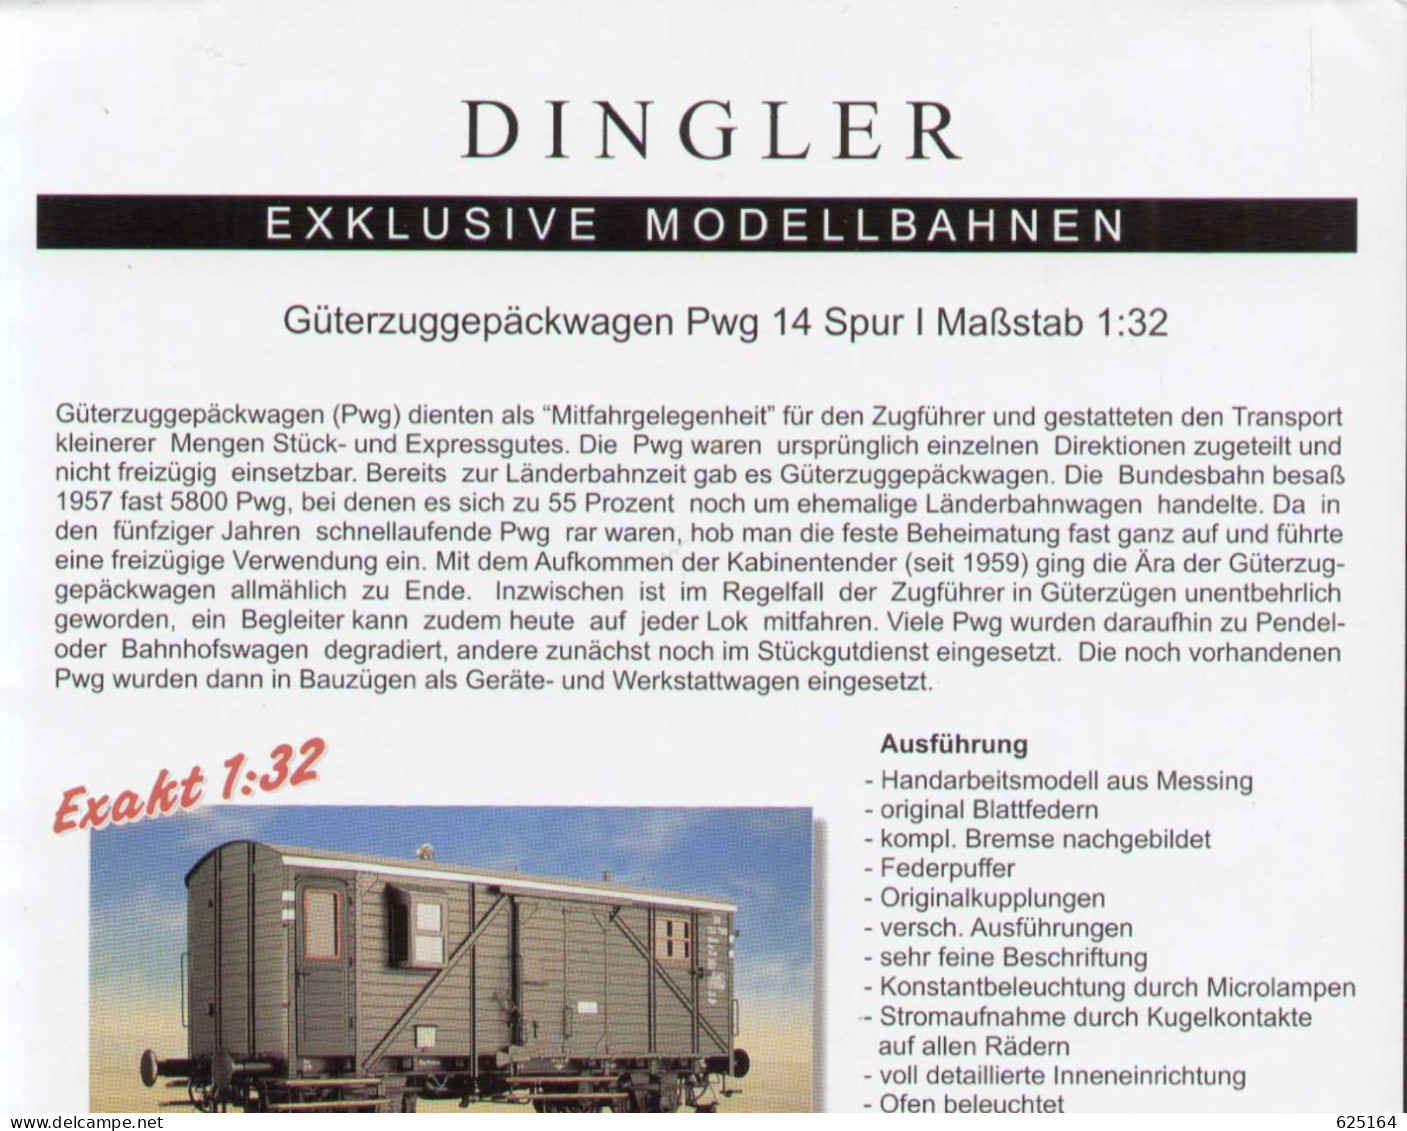 Catalogue DINGLER EXCLUSIVE MODELLBAHNEN 1999 Spur I Informationsblatt - Deutsch